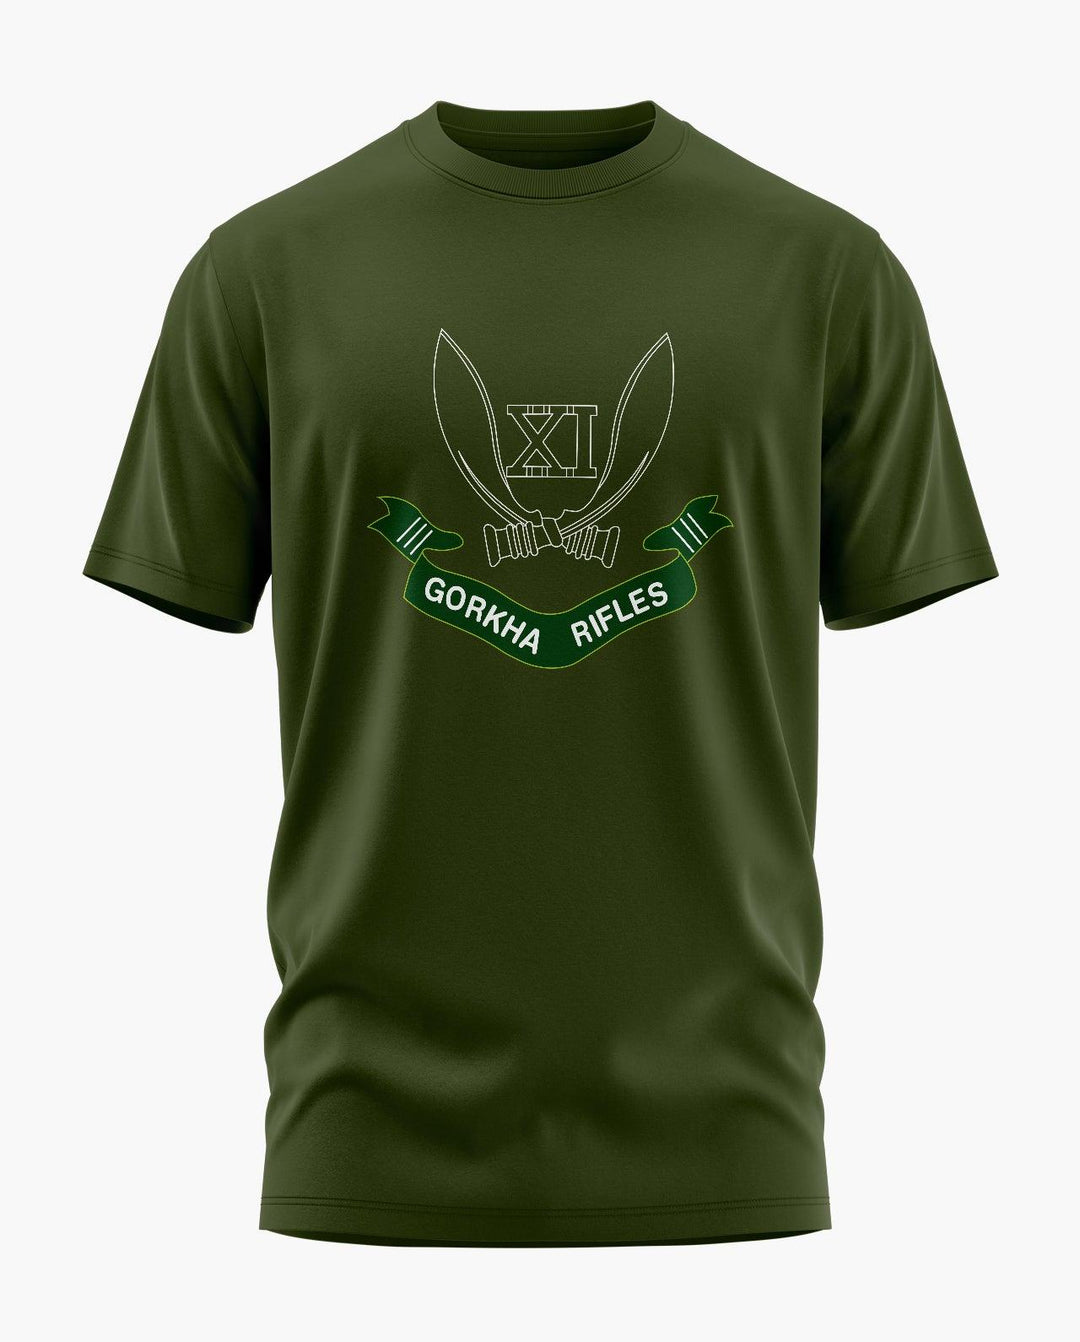 11 Gorkha Rifles T-Shirt - Aero Armour